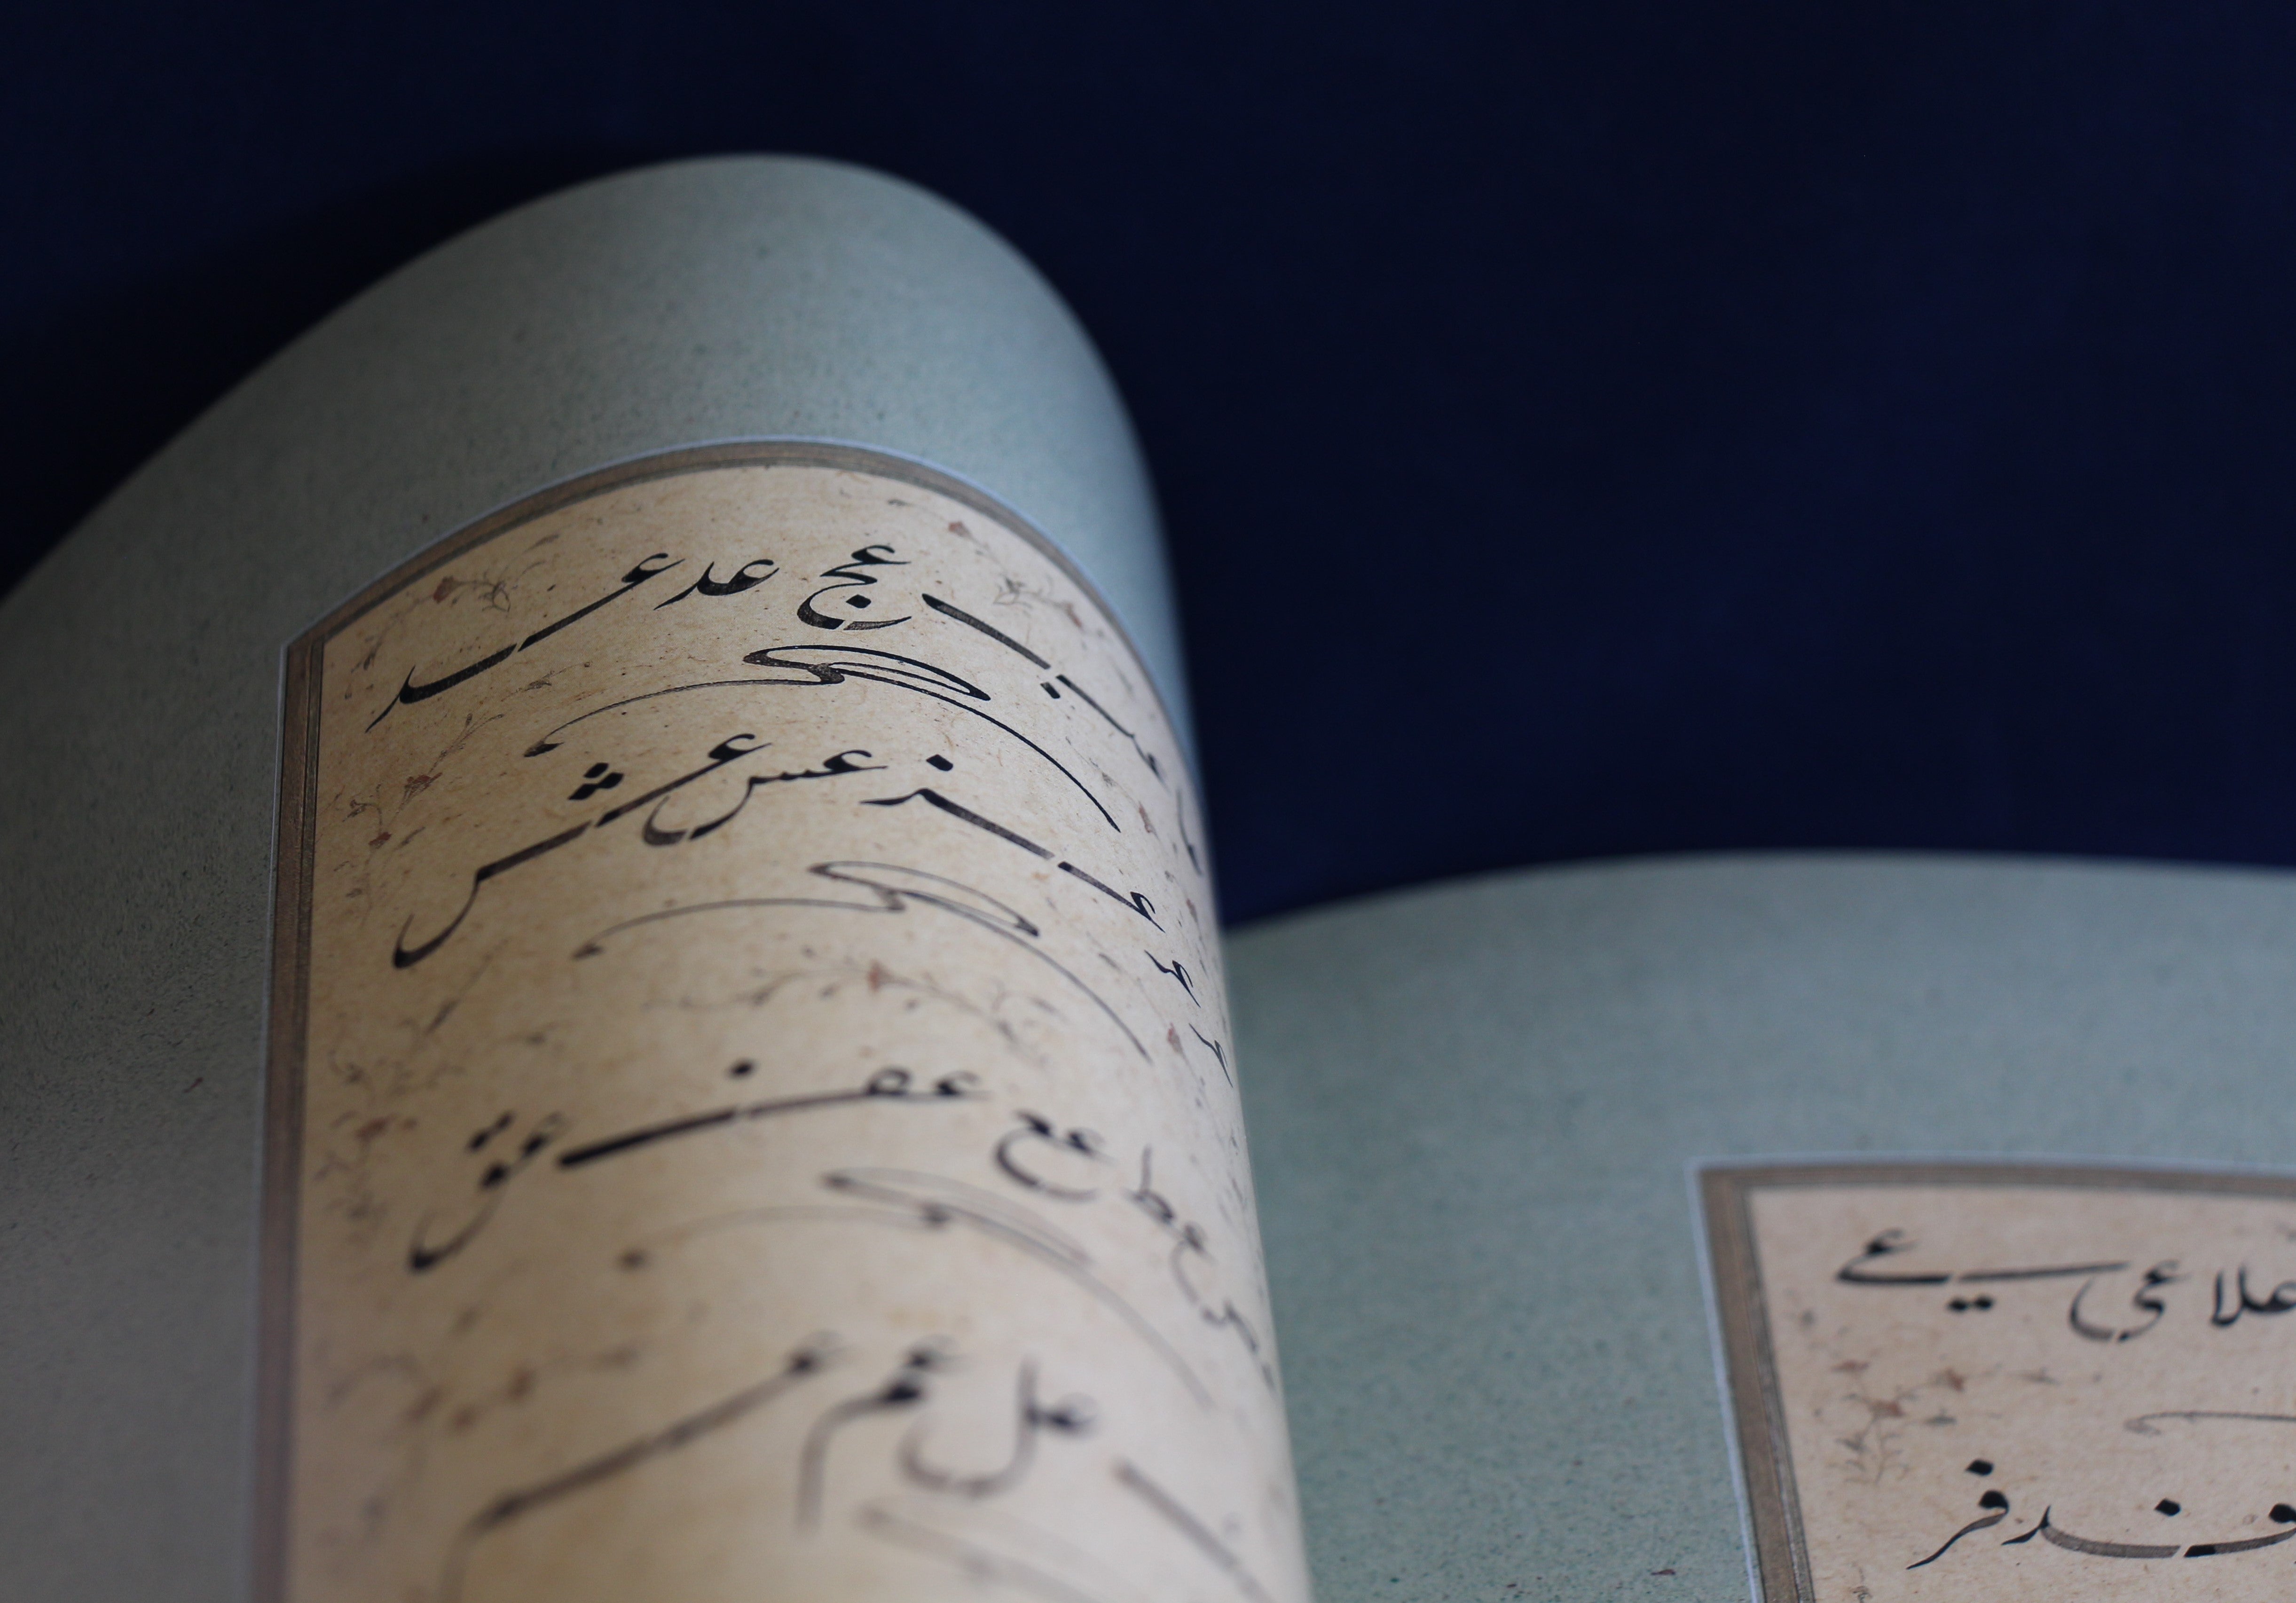 Copy book (mashq) for the ta'liq script - based on work Hulusi Efendi